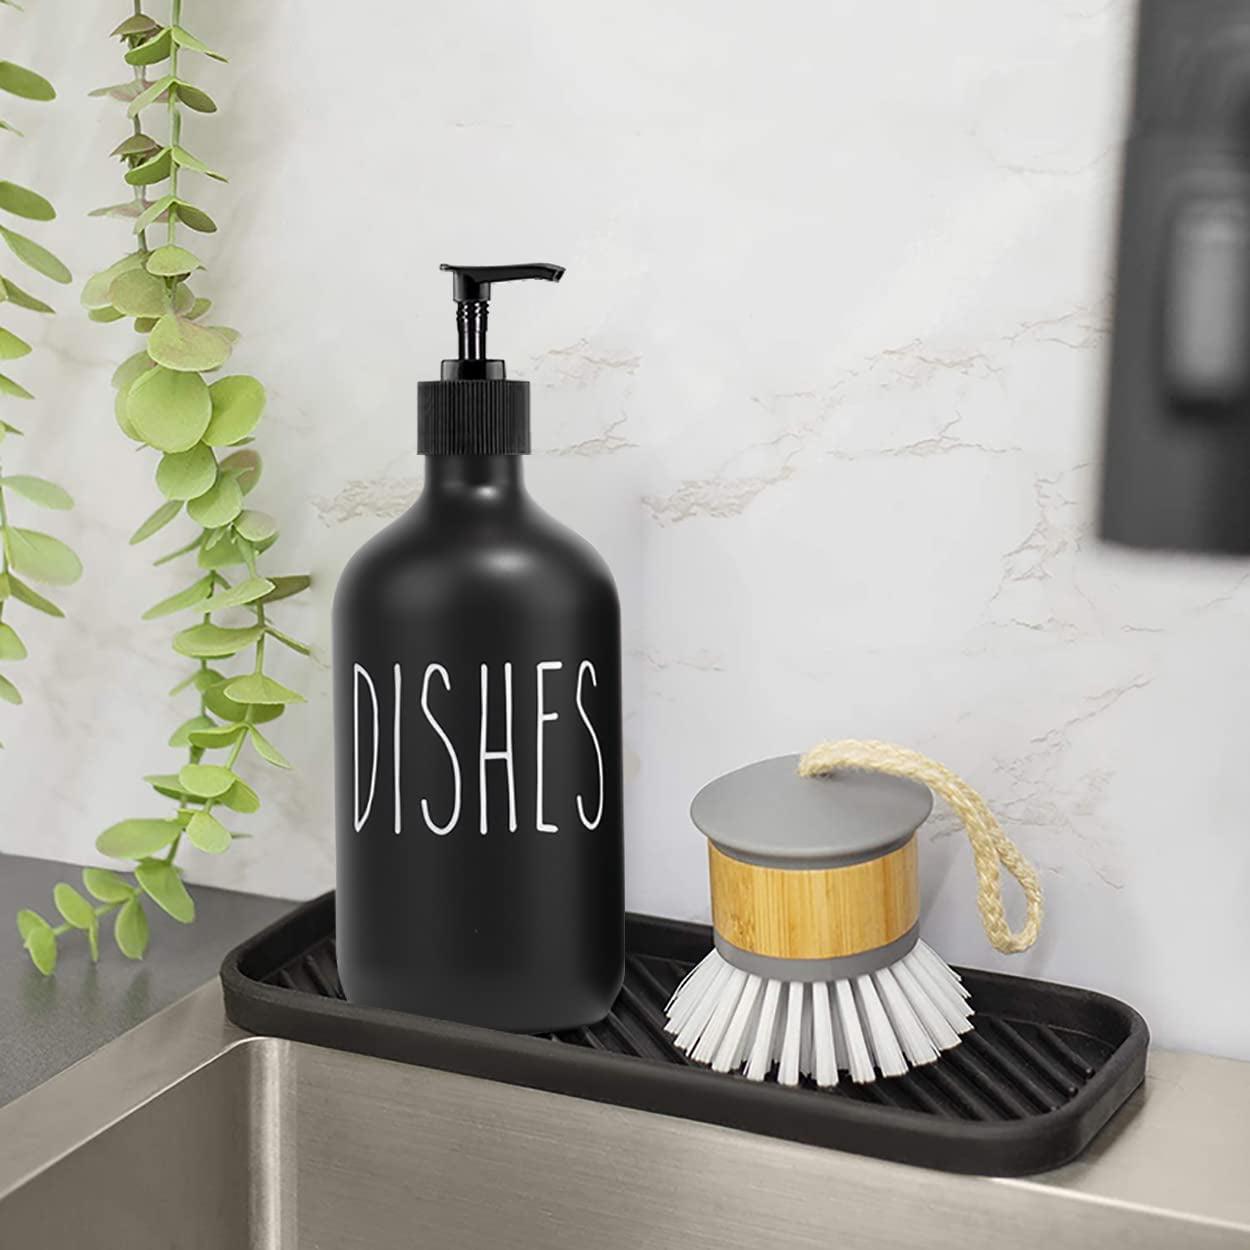 GIRLUFO Black Kitchen Soap Dispenser Set,4Pcs Dish Soap Dispenser Kitchen  with Bamboo Tray and Natural Dish Brush,Modern Ceramic Hand and Dish Soap